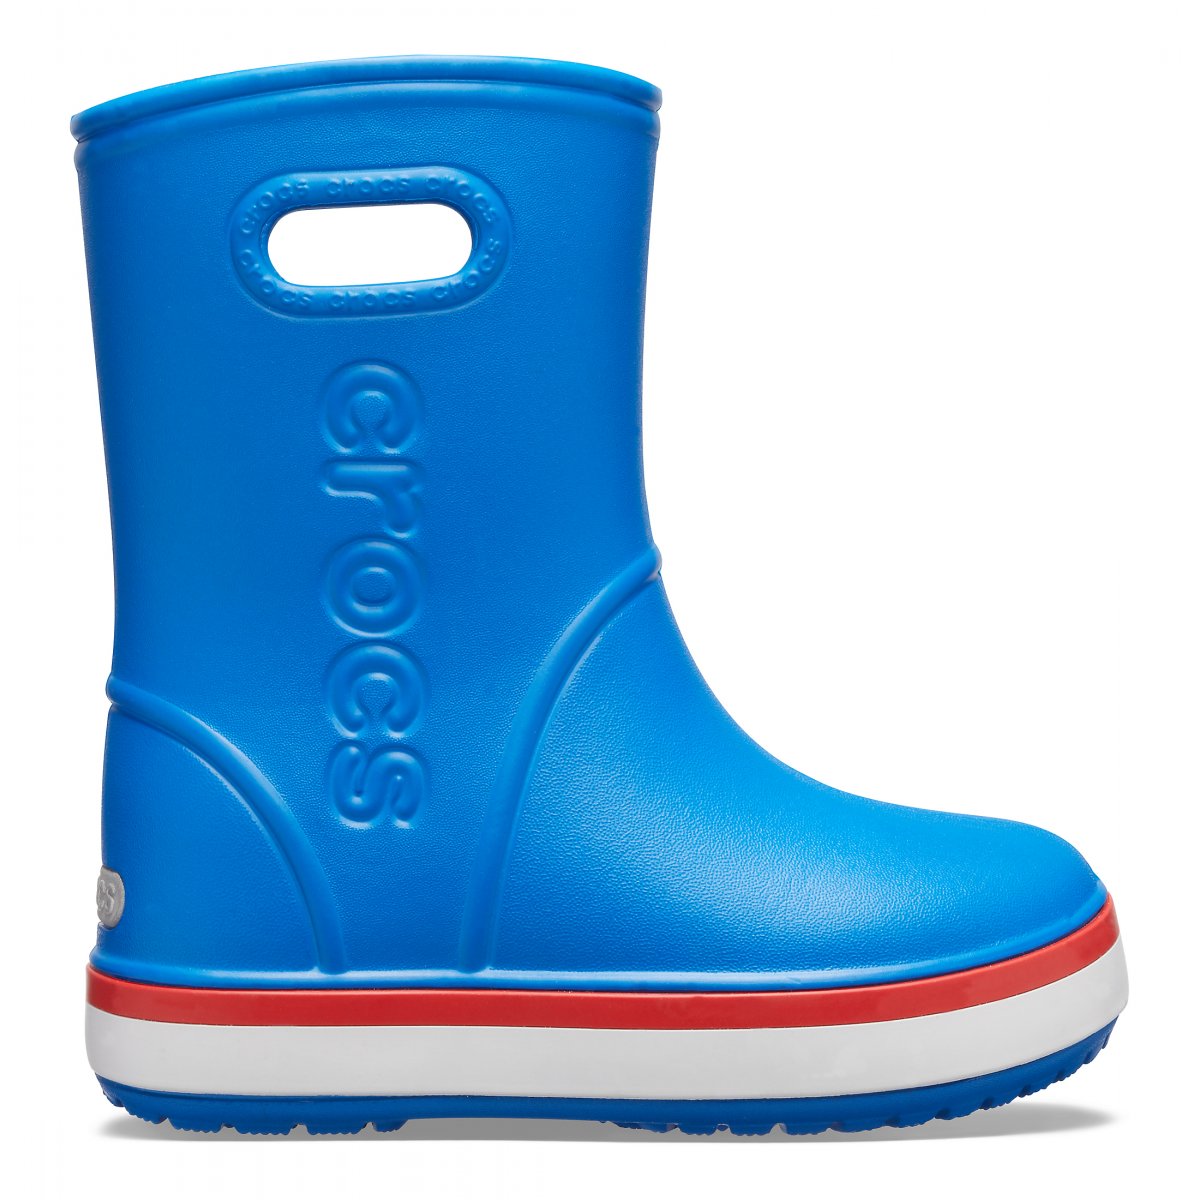 Crocs Crocband Rain Boot K Stivali di Gomma Unisex-Bambini